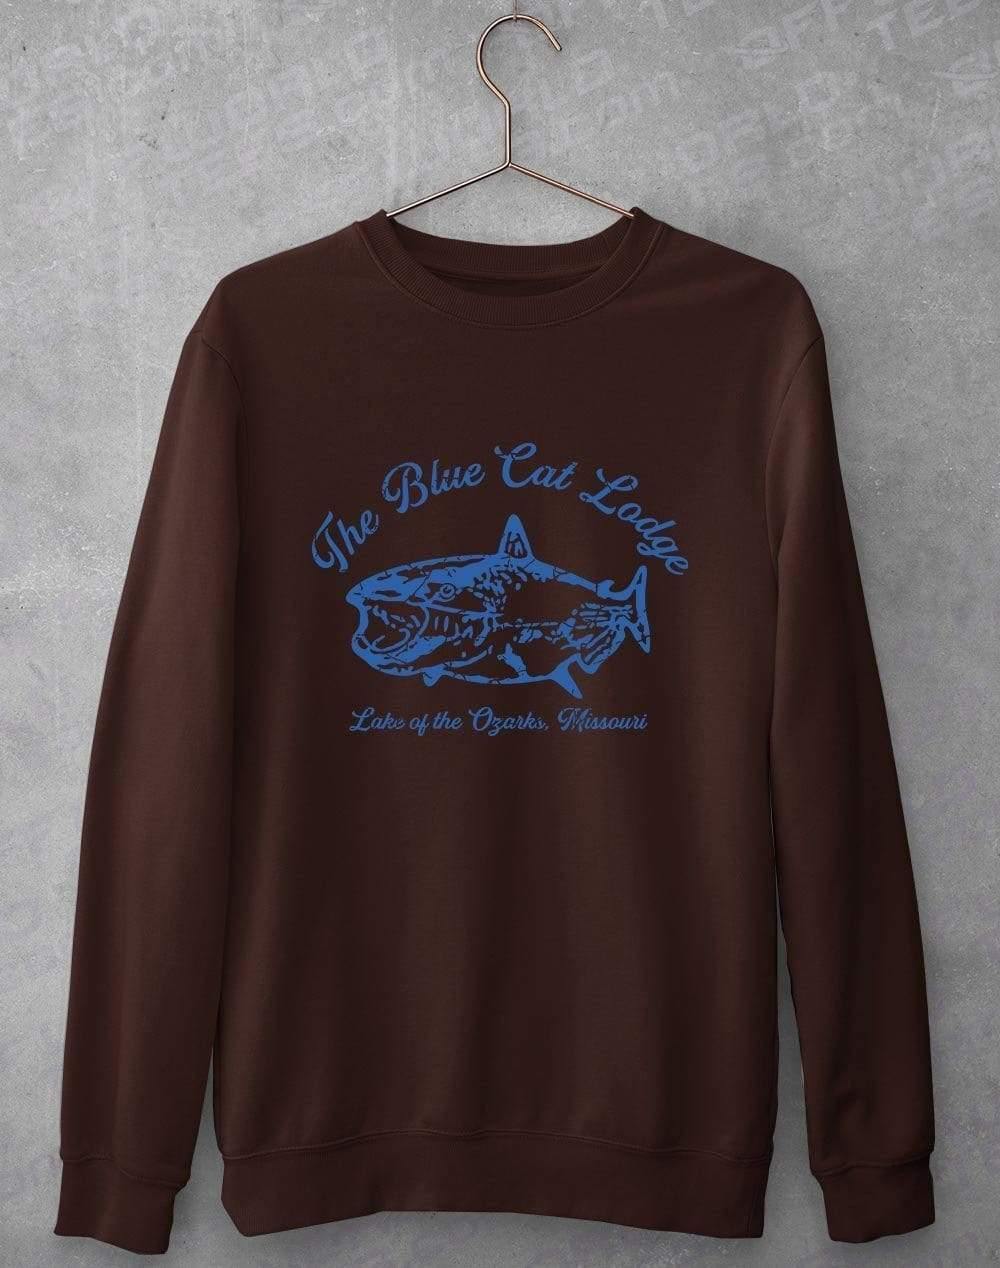 The Blue Cat Lodge Sweatshirt S / Hot Chocolate  - Off World Tees